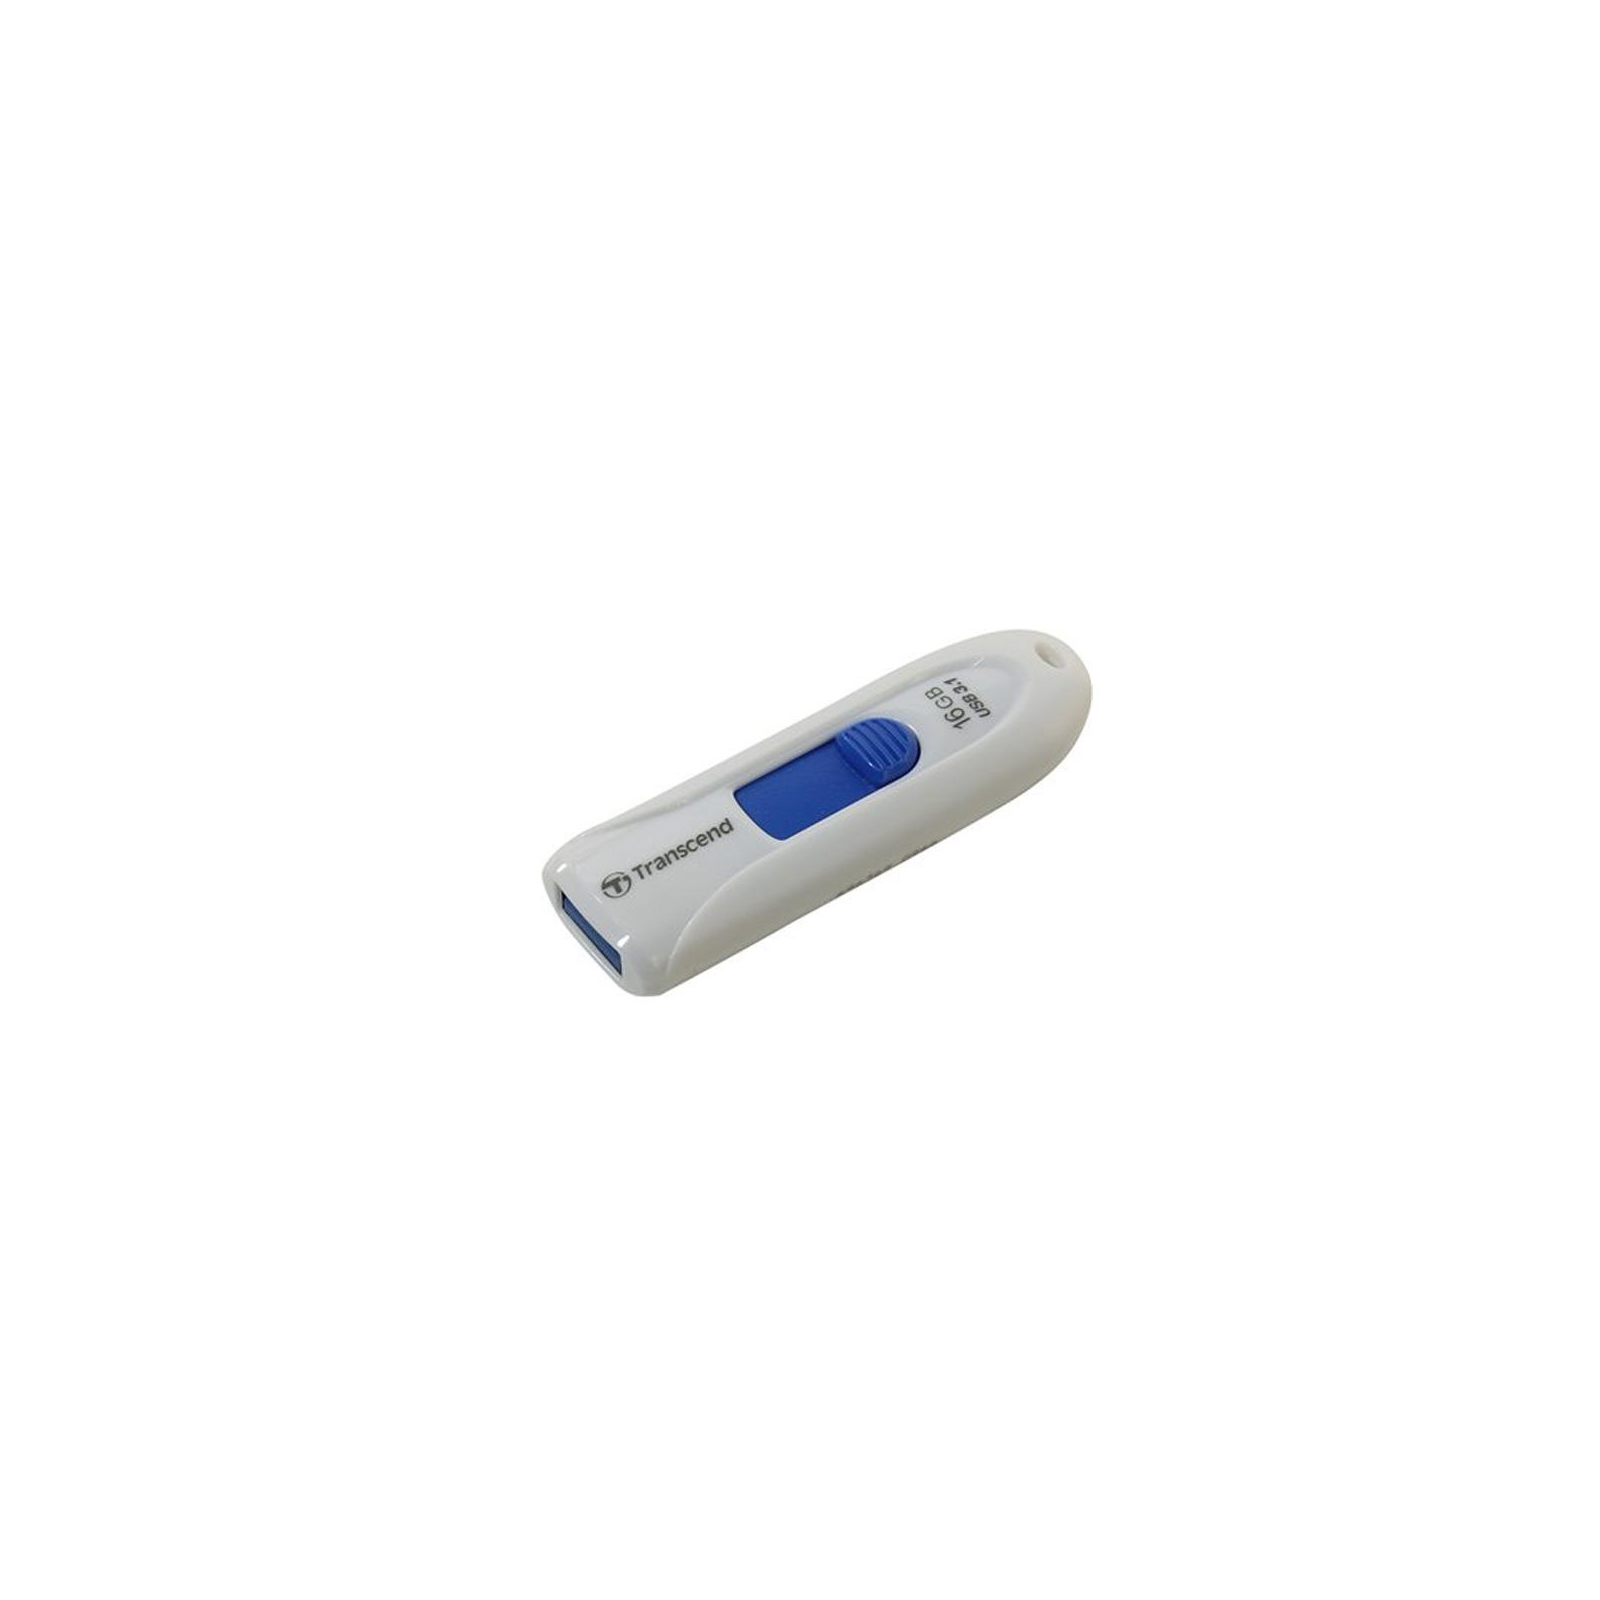 USB флеш накопитель Transcend 128GB JetFlash 790 White USB 3.0 (TS128GJF790W) изображение 3